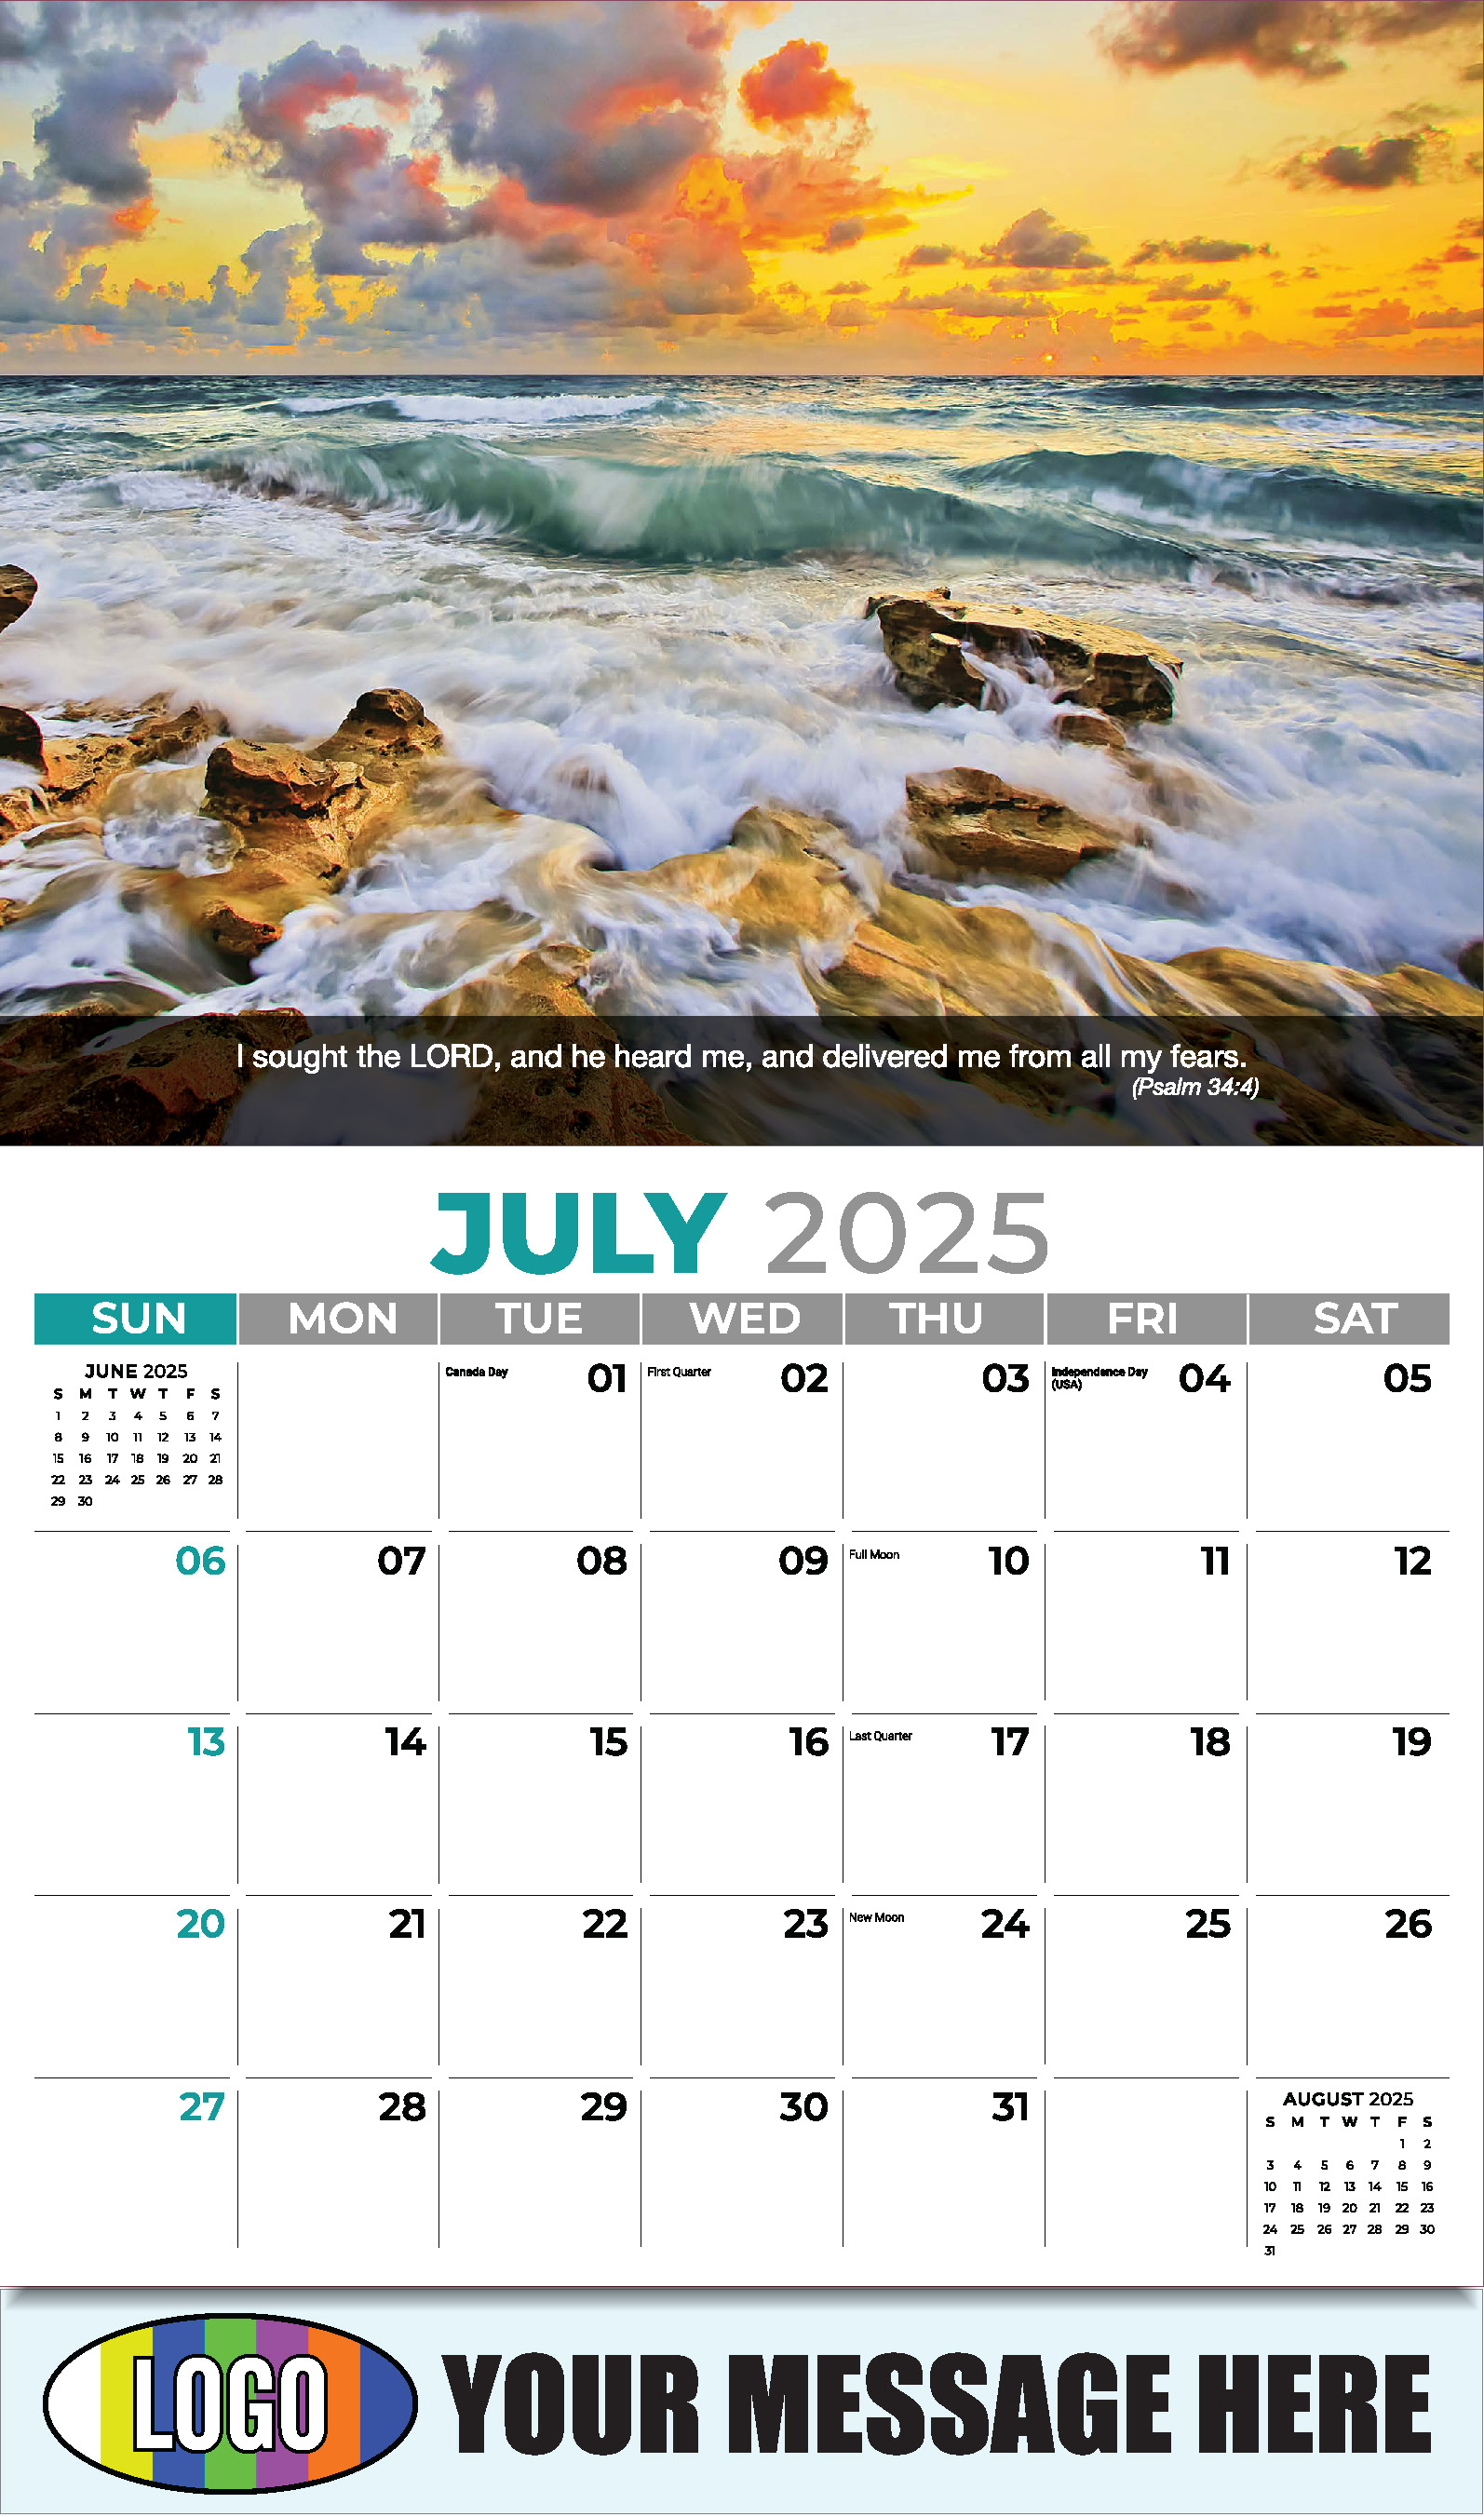 Faith Passages 2025 Christian Business Advertising Calendar - July